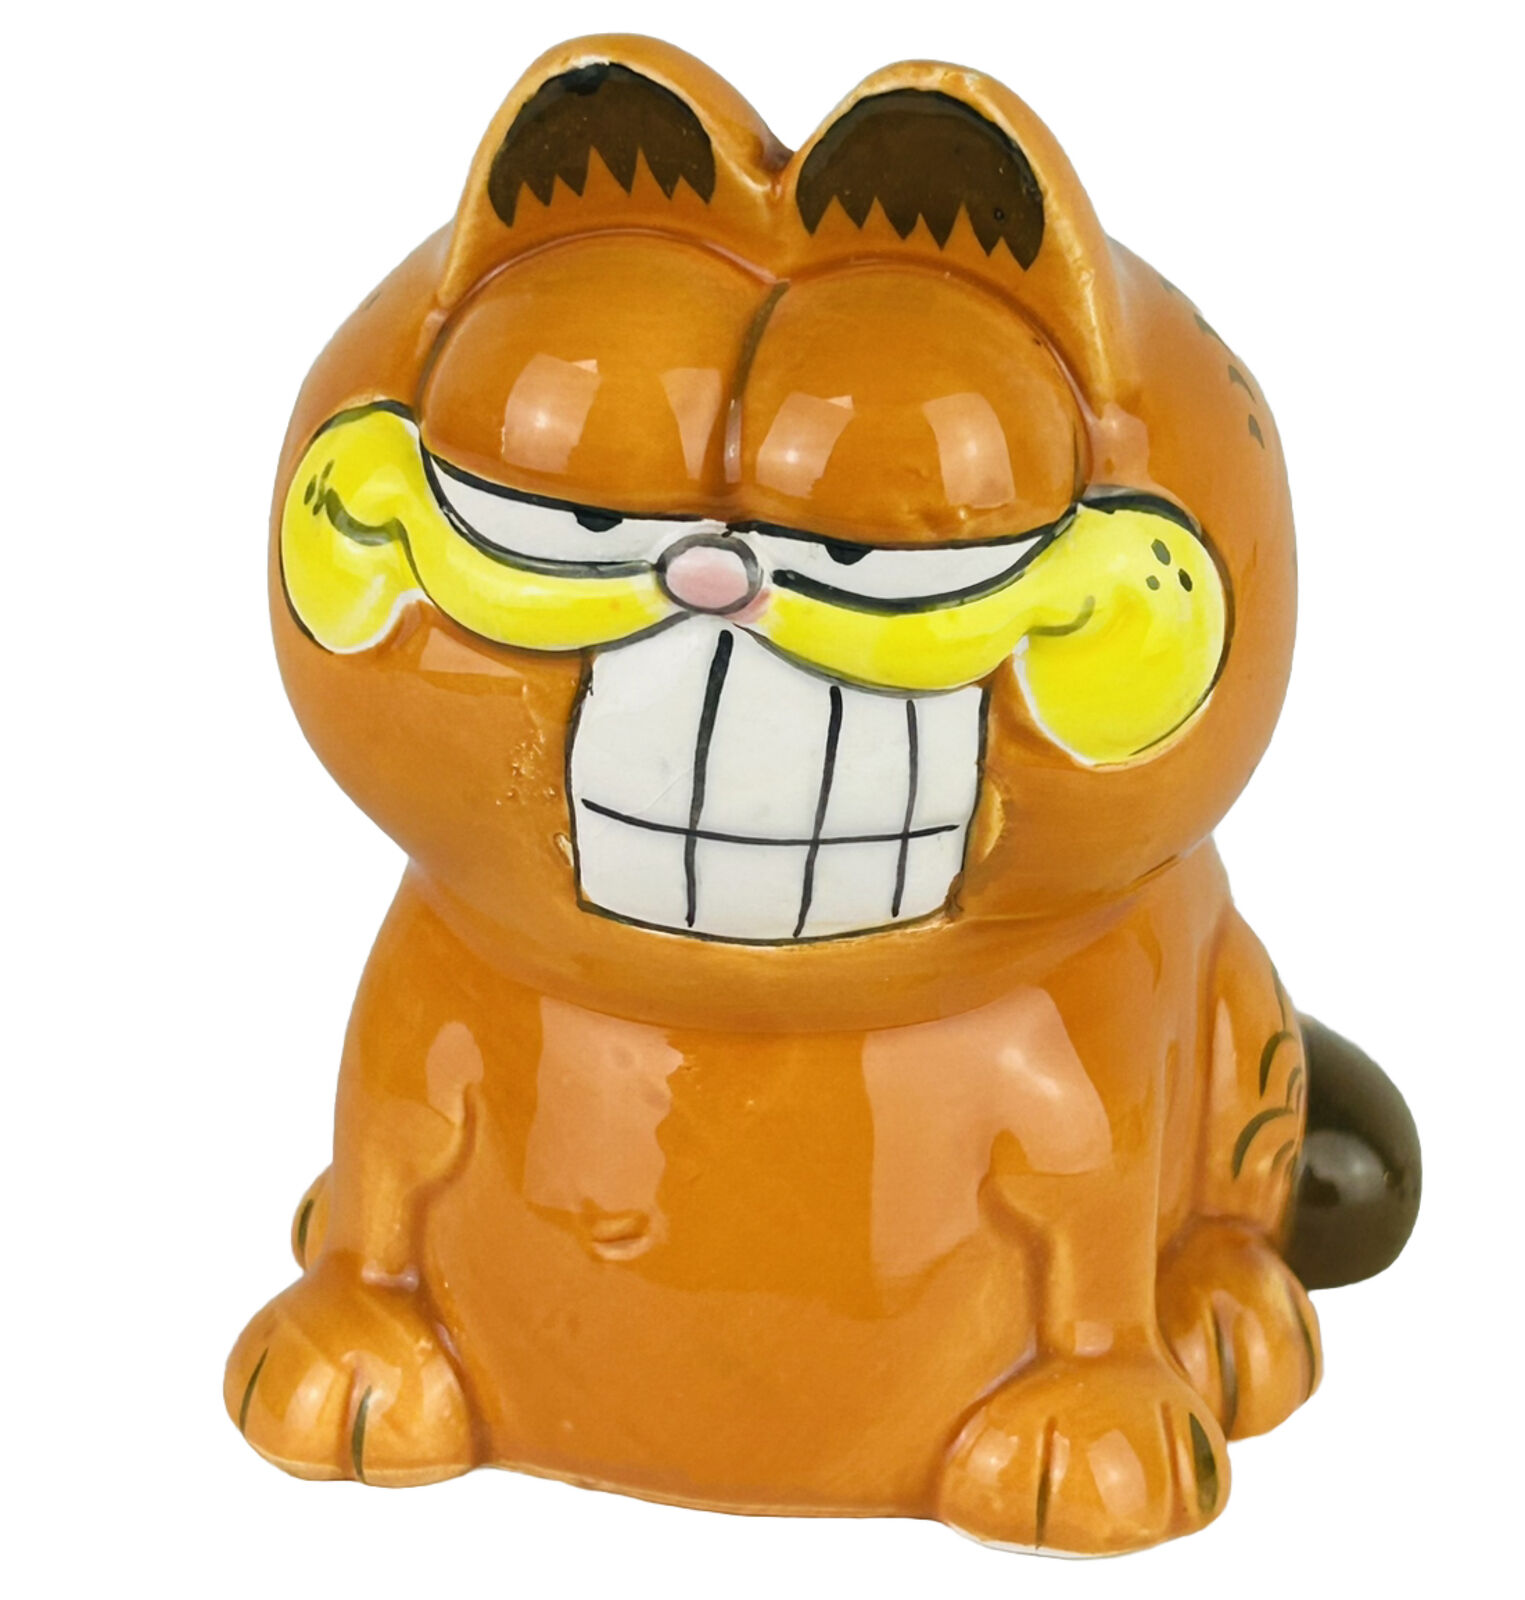 Vintage Enesco Smirking Garfield Ceramic figurine